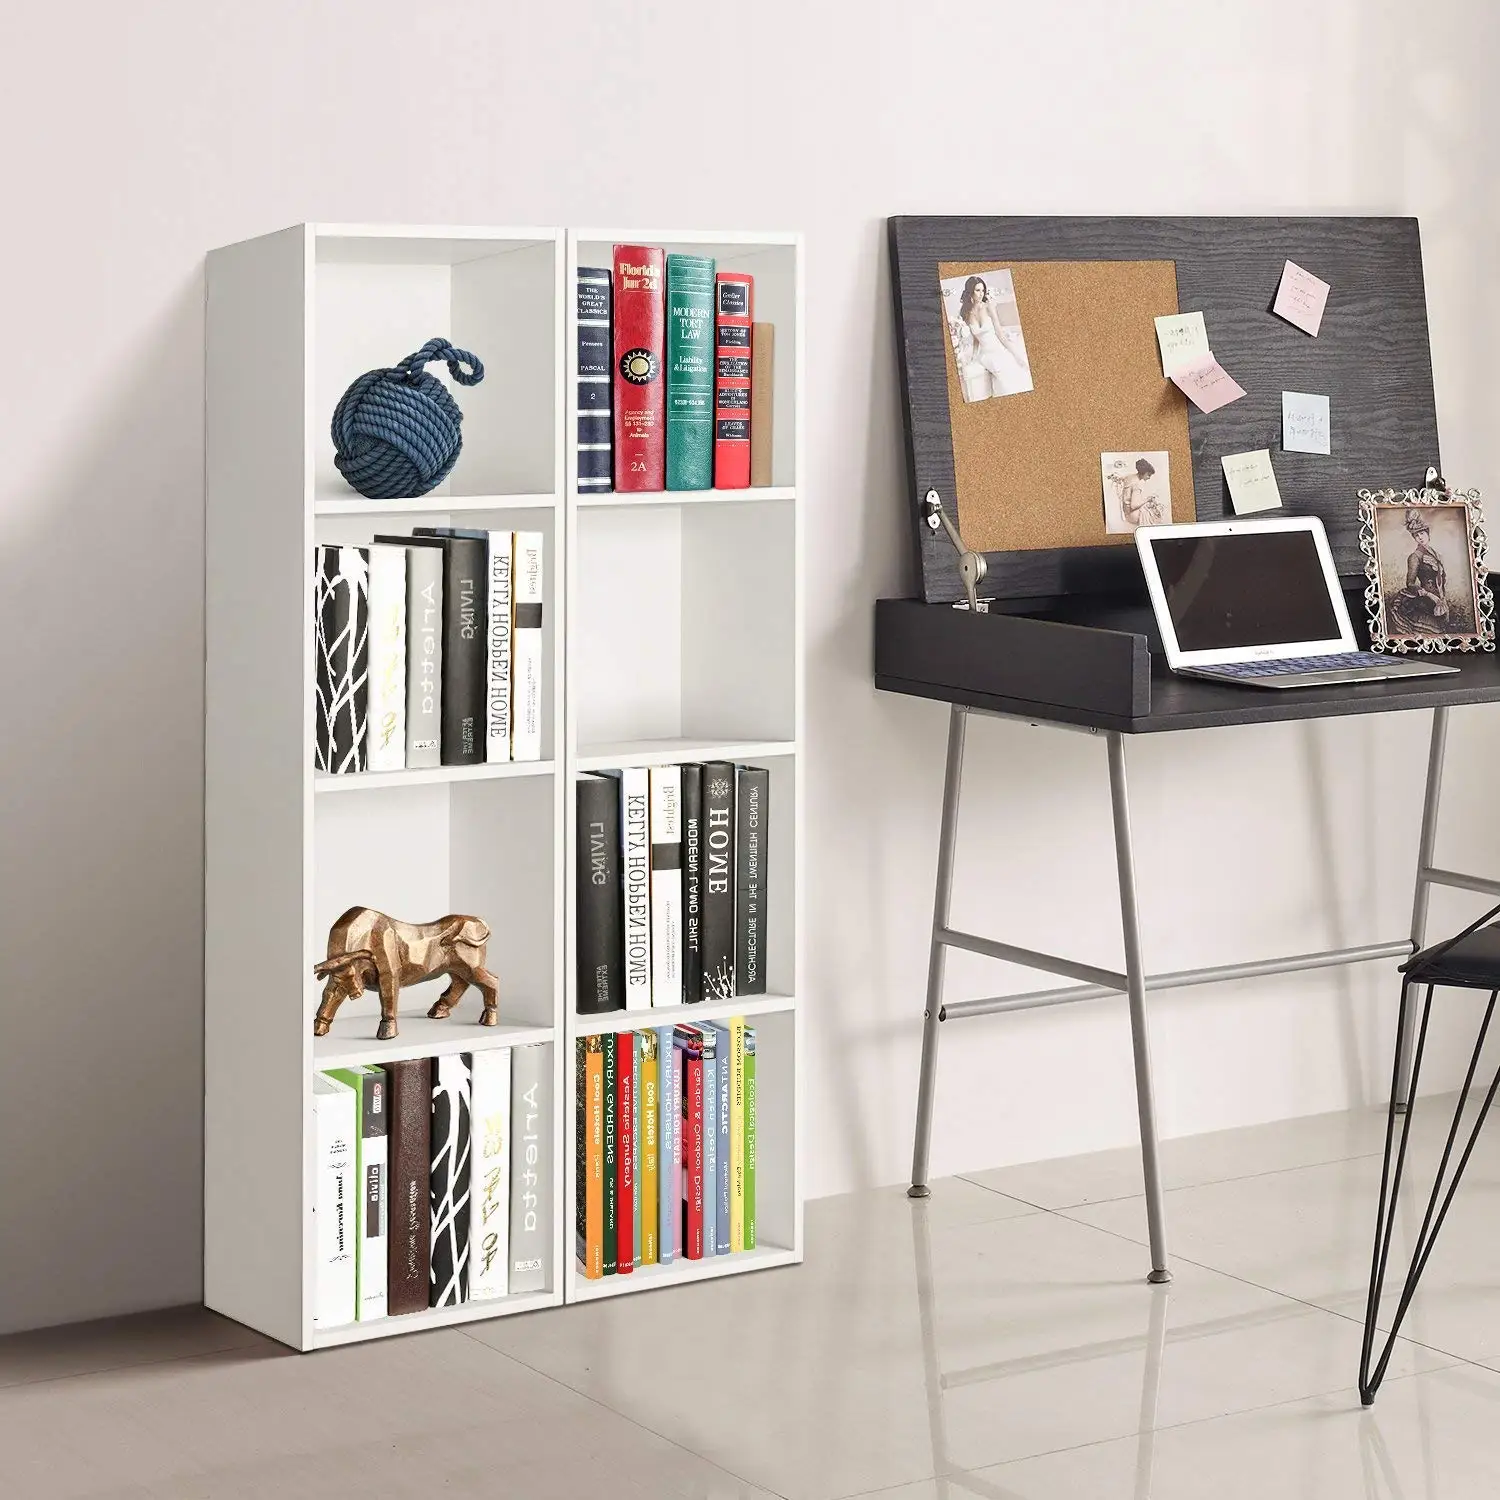 Cube Bookcase Display Shelving Storage Bookshelf Room Organizer Cabinet Unit Wood Stand White4 Tier Oak 30 x 30 x 106cm